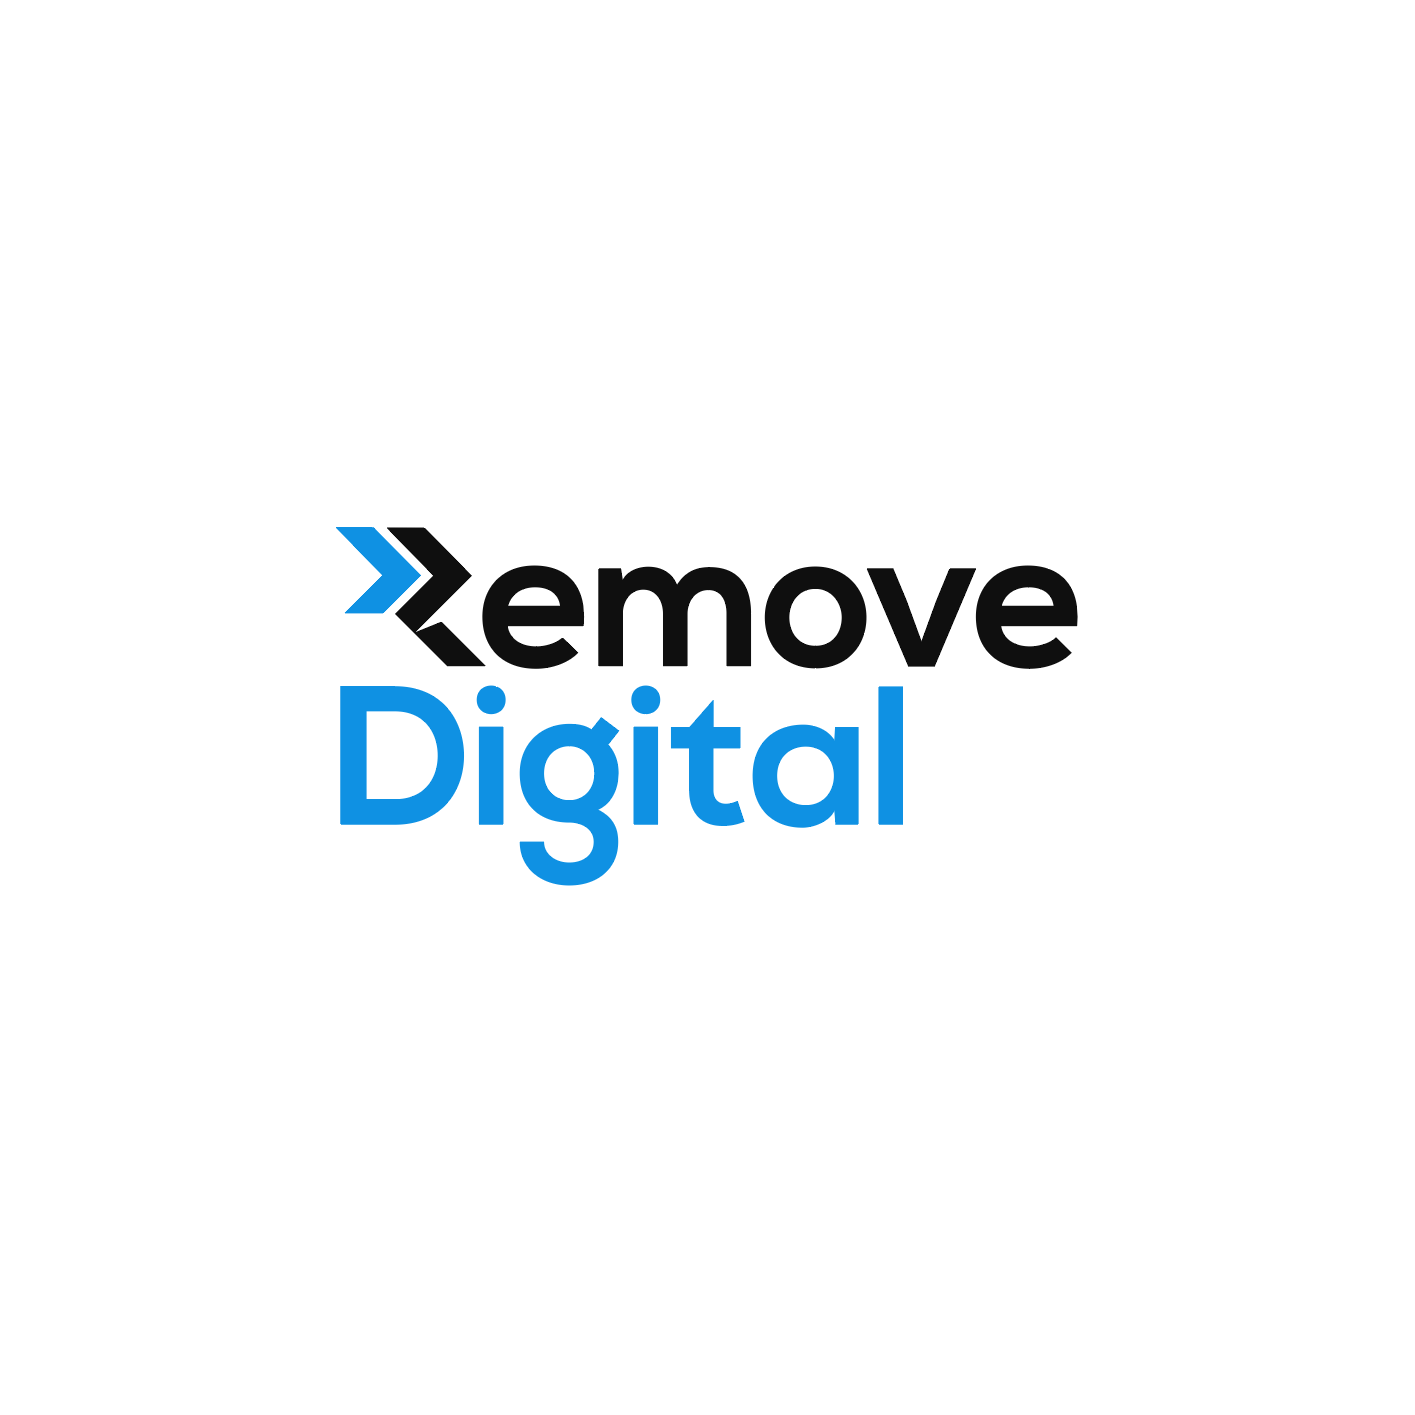 Remove Digital